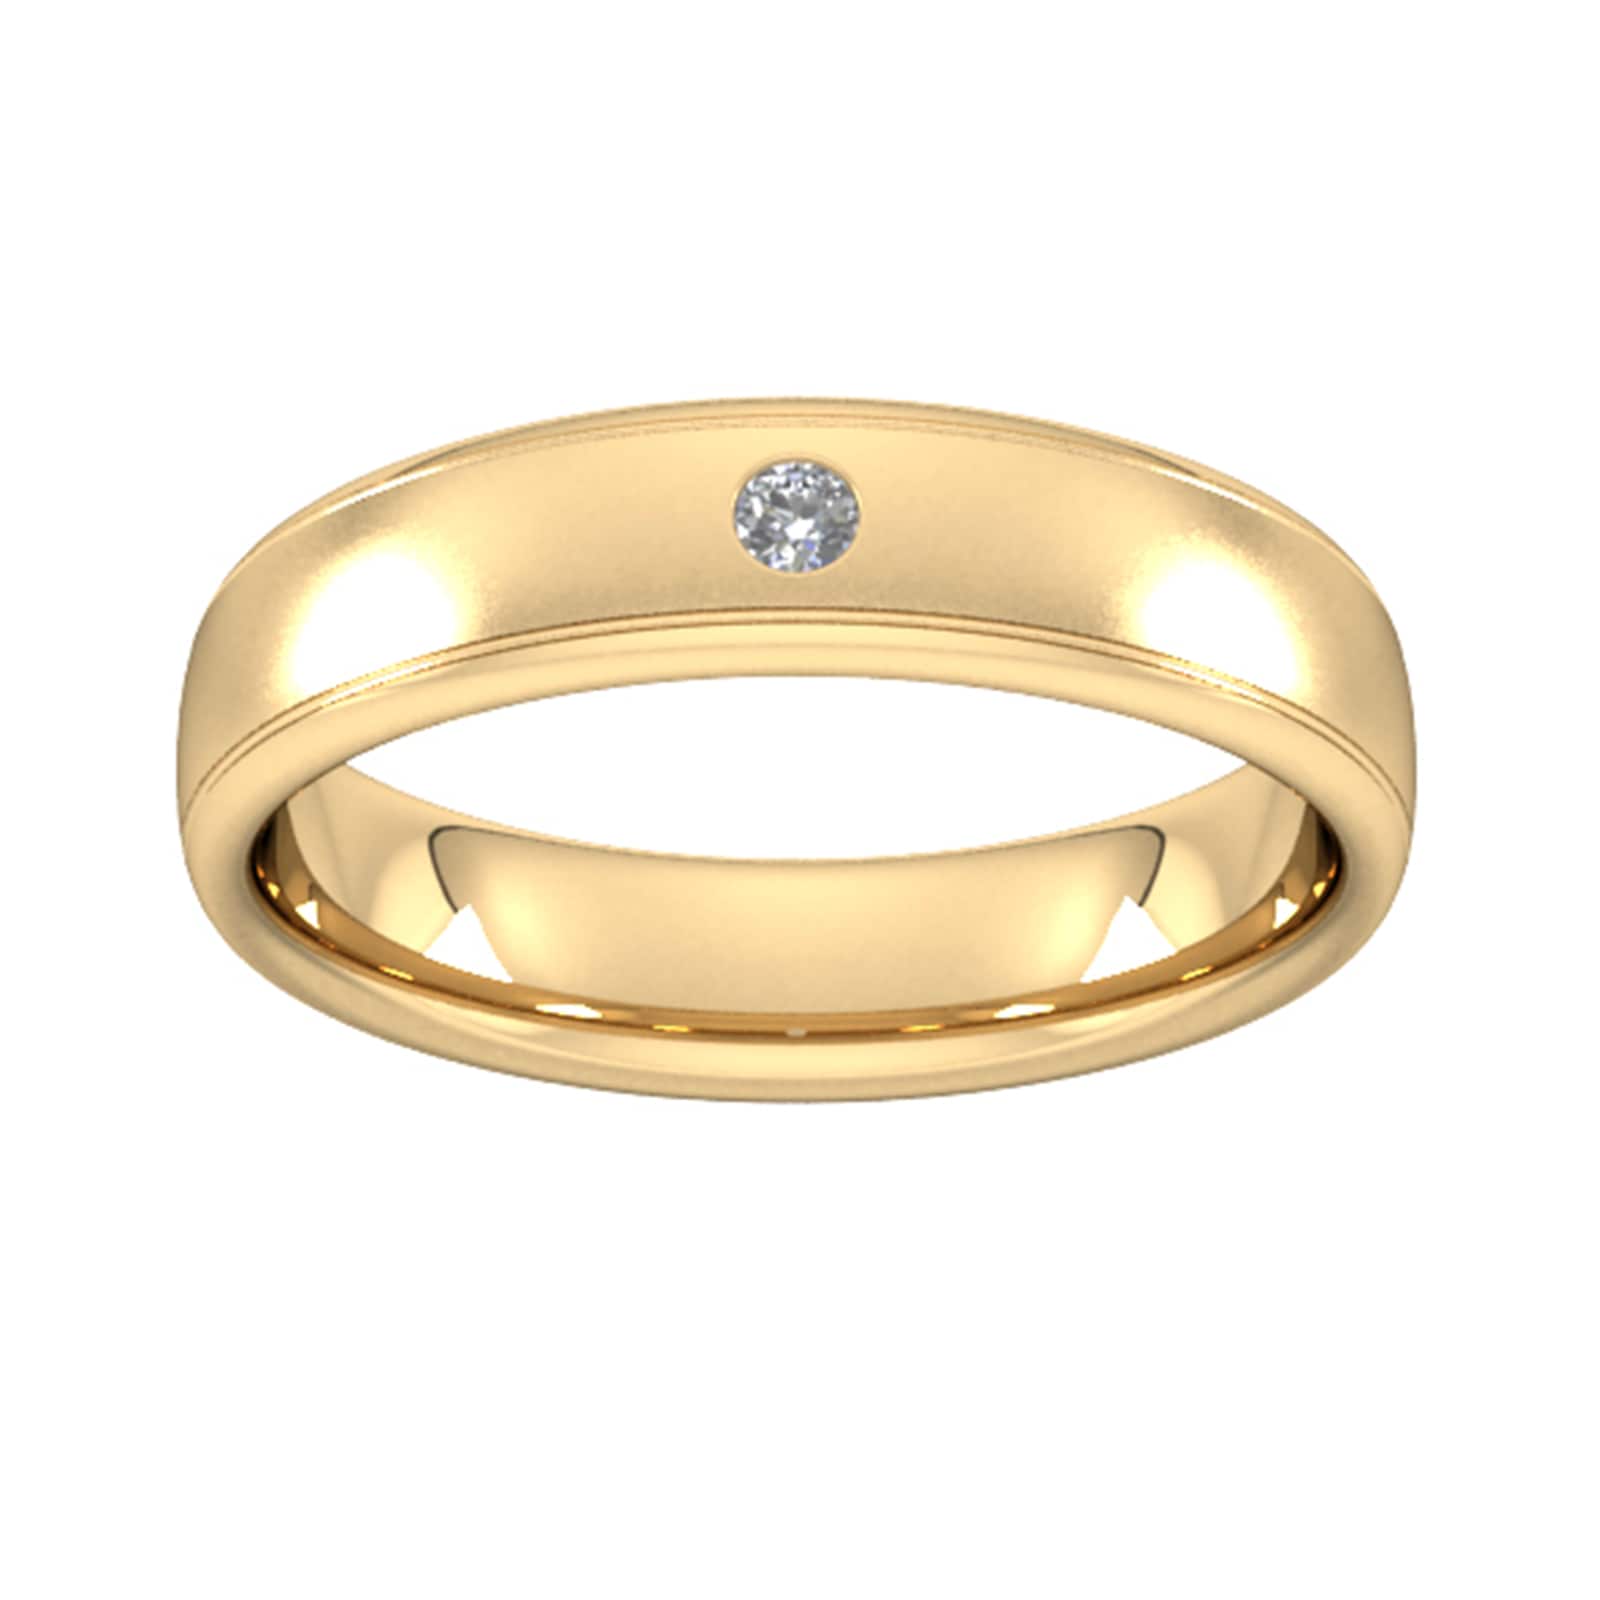 5mm Brilliant Cut Diamond Set Wedding Ring In 18 Carat Yellow Gold - Ring Size M